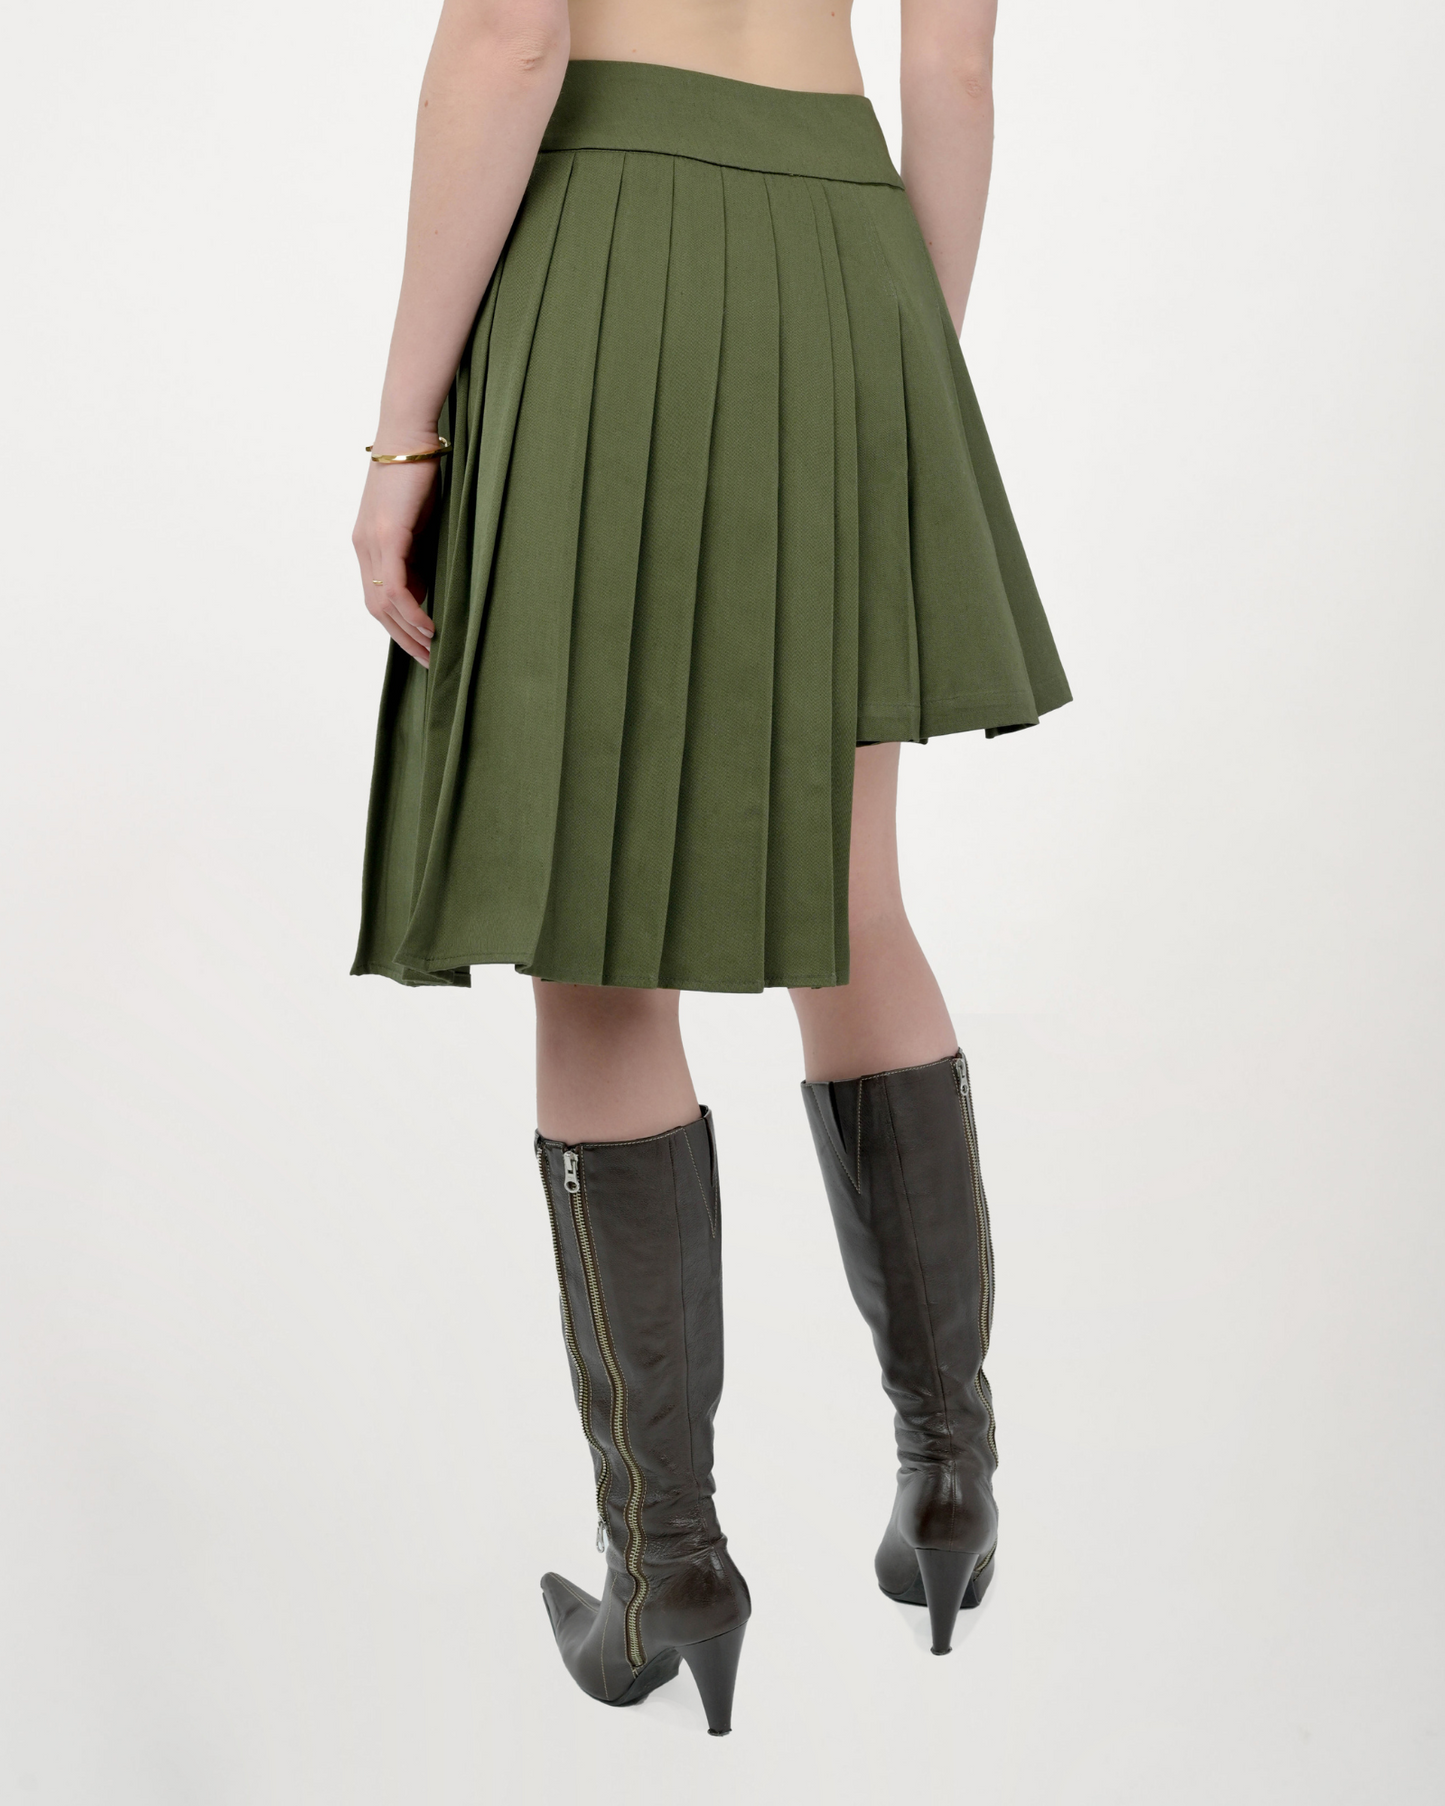 Asha Pleated Layered Skirt by Aseye Studio in Military Olive Green 